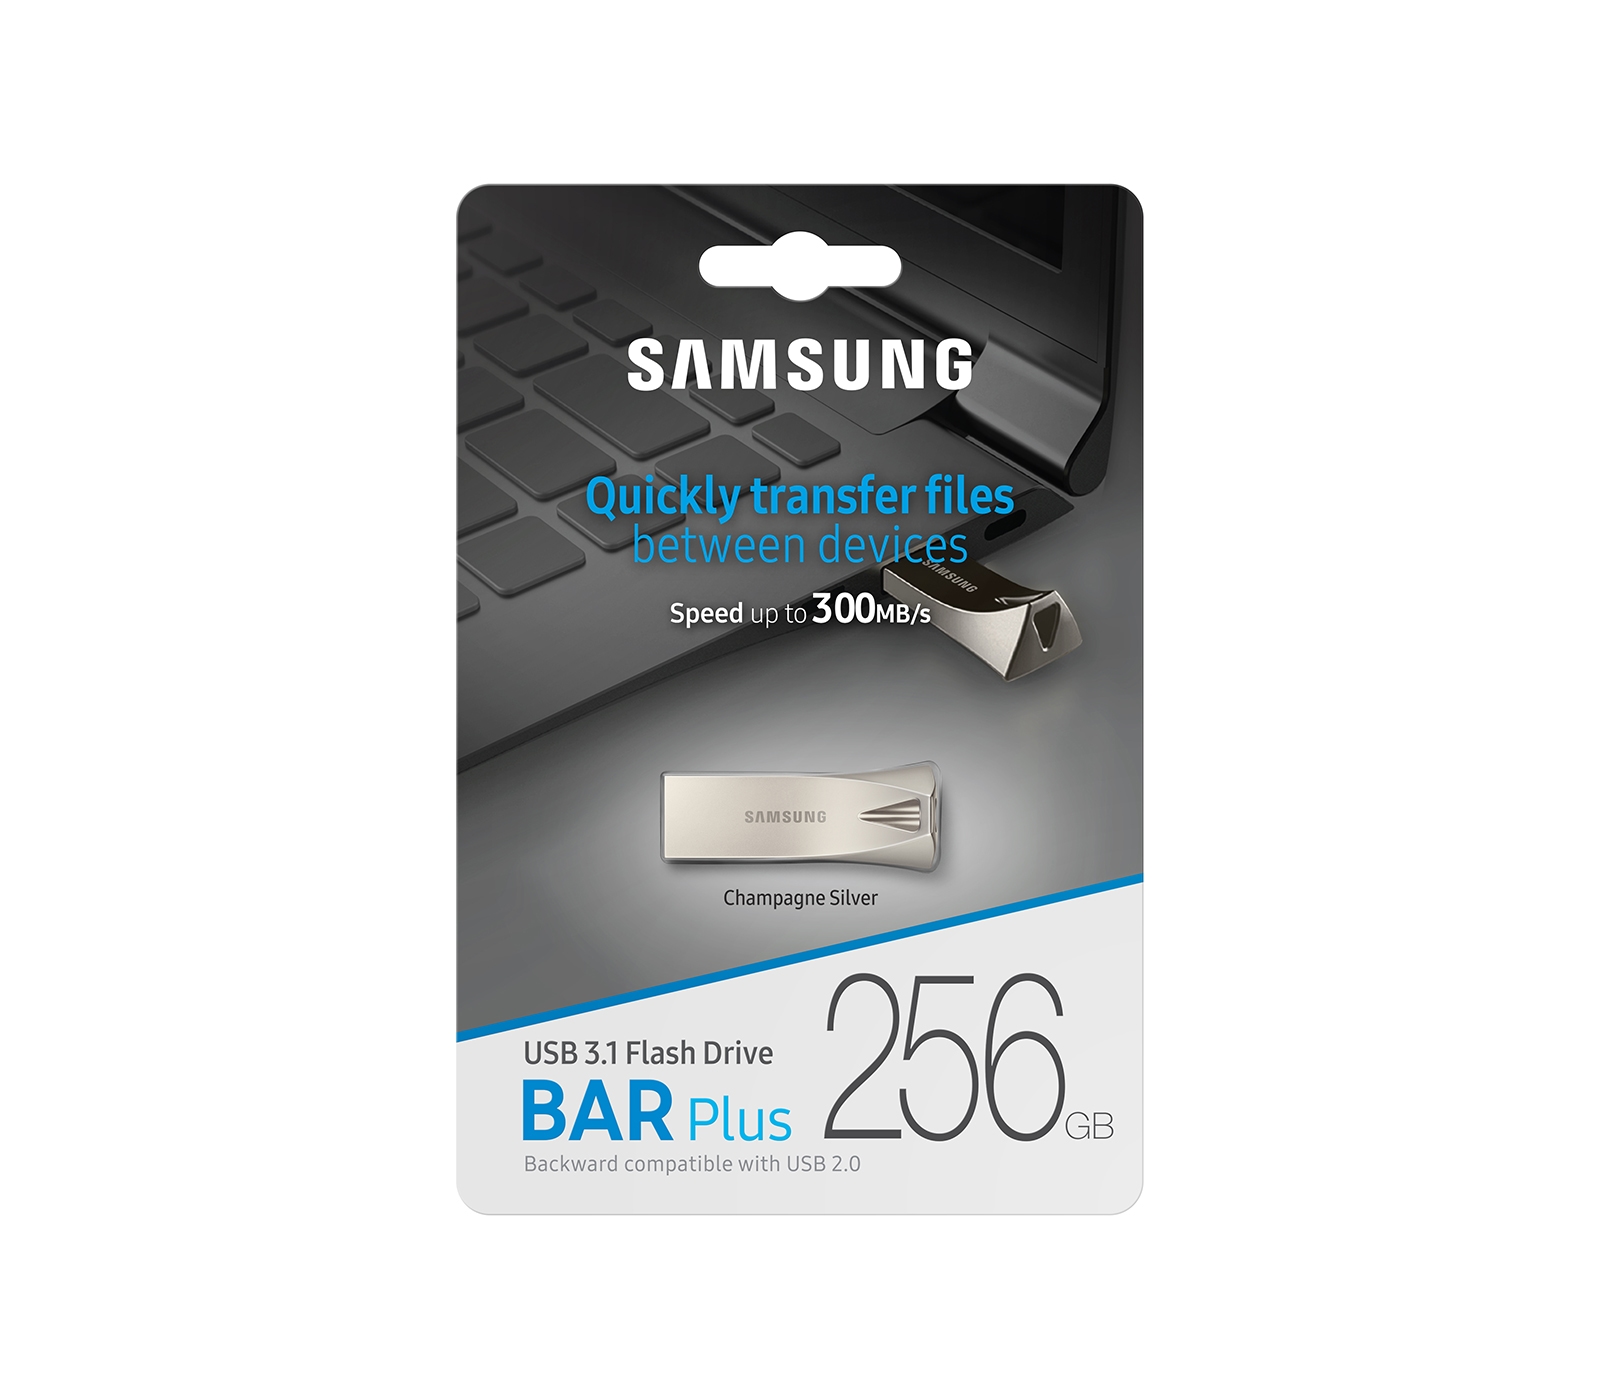 Katedral Konklusion vaskepulver USB 3.1 Flash Drive BAR Plus 256GB Champagne Silver Memory & Storage -  MUF-256BE3/AM | Samsung US